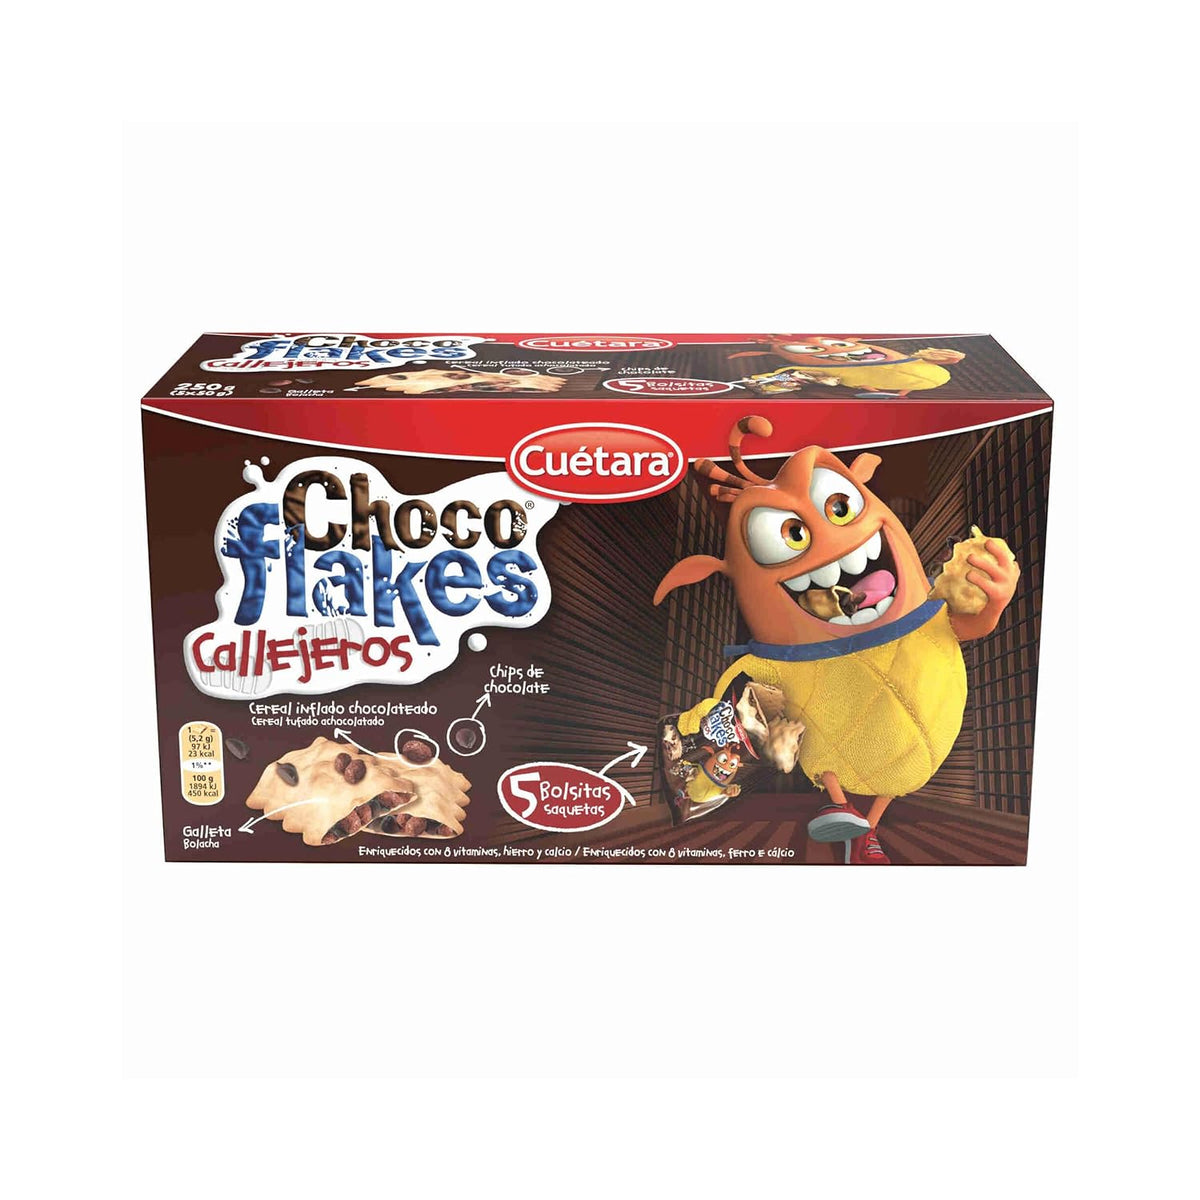 Choco flakes - Cuetara - 450 g